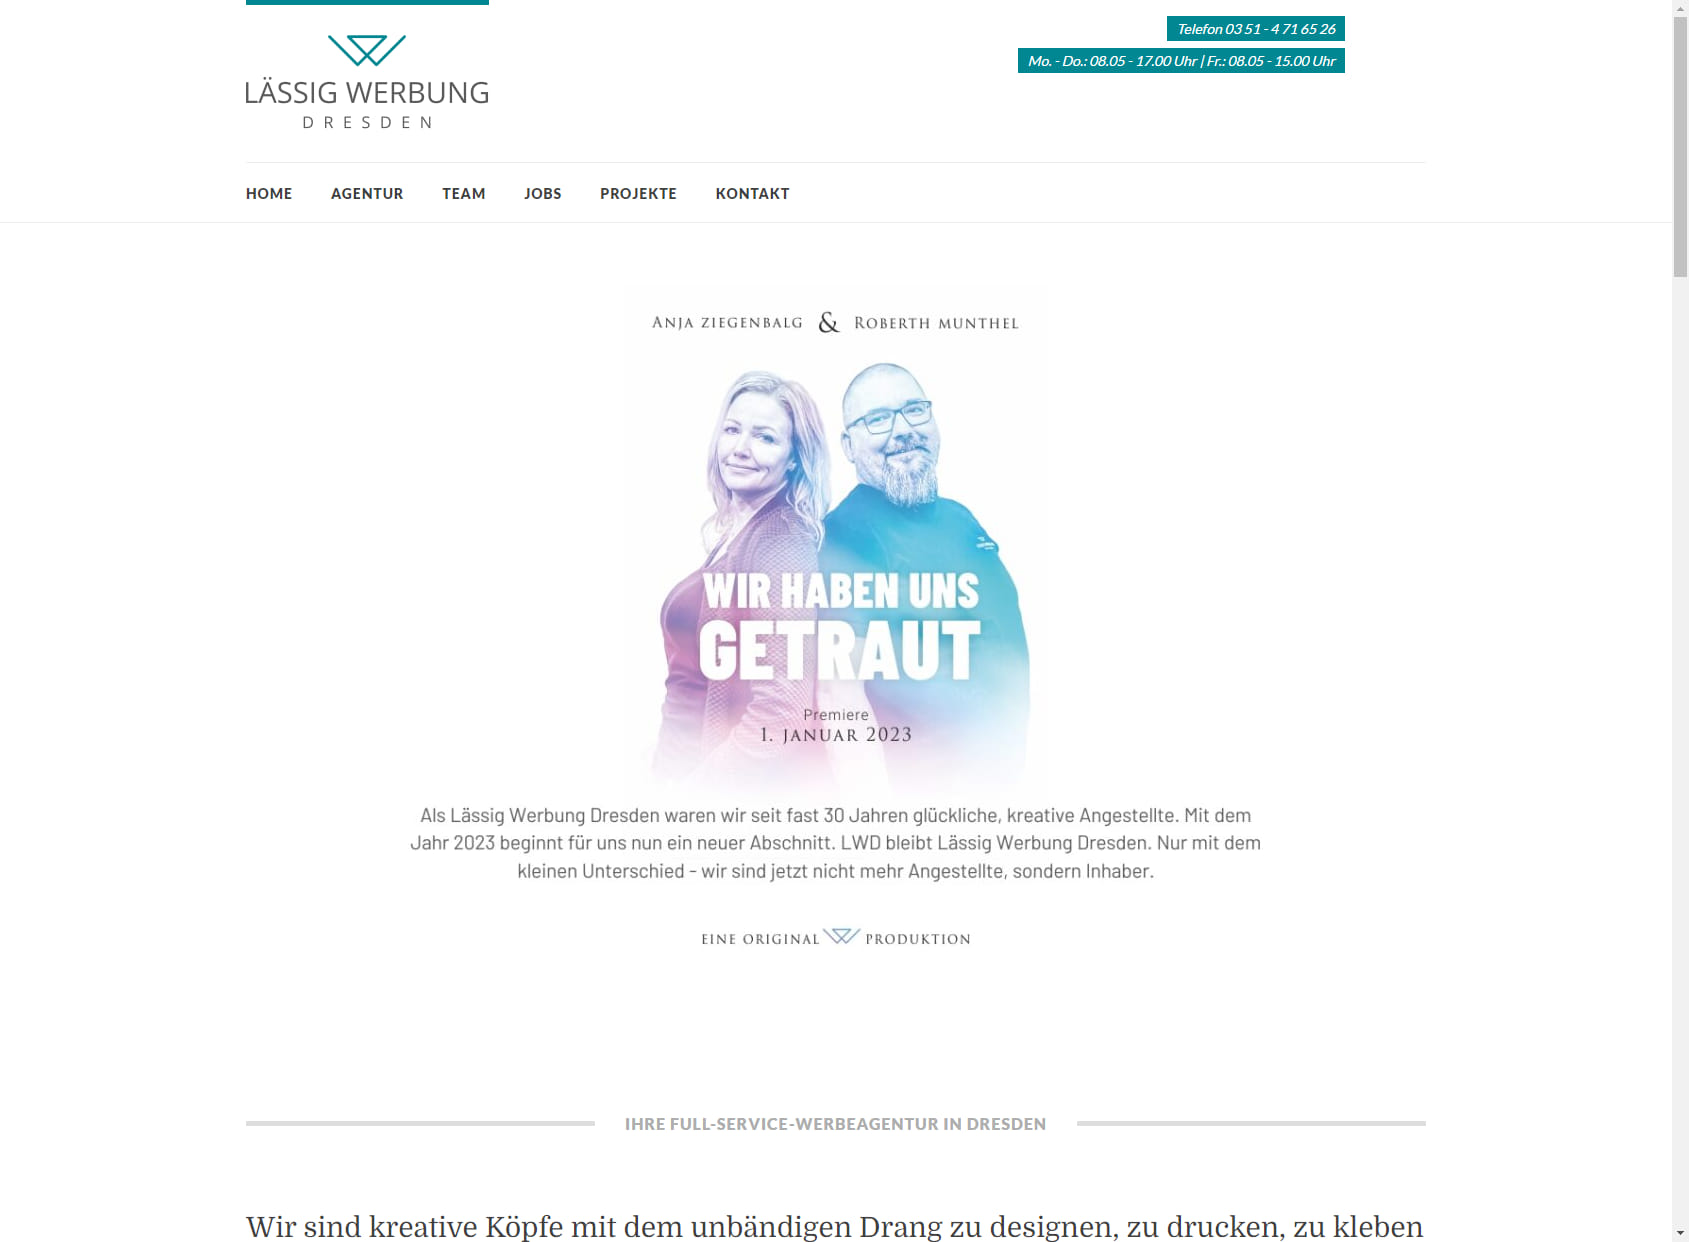 LWD | Translucent Advertising Dresden